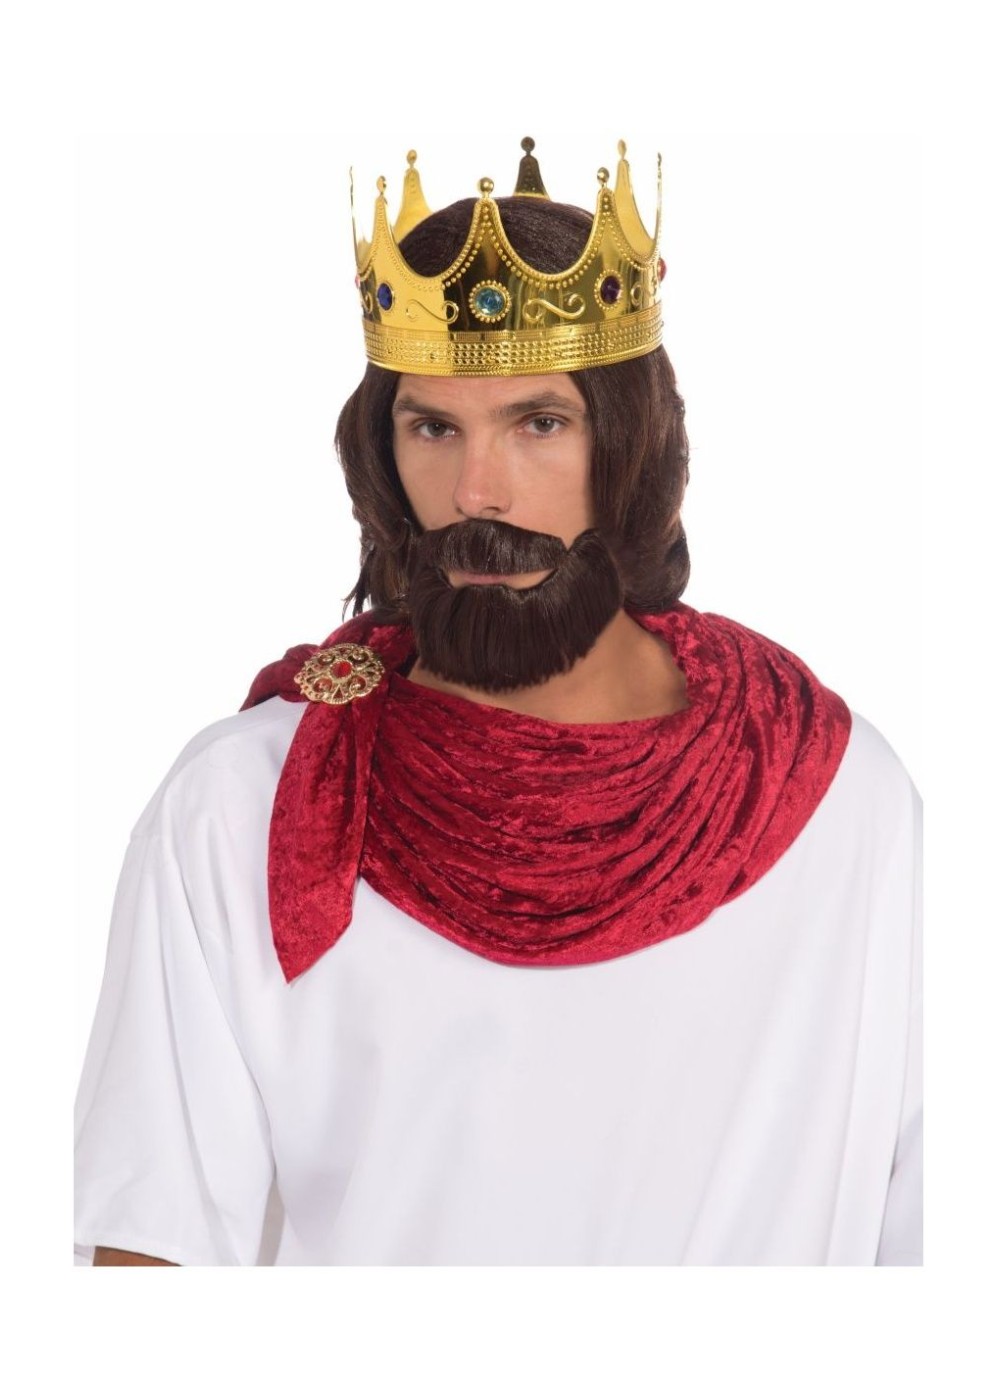 Regal King Crown And Facial Hair Men Costume Kit